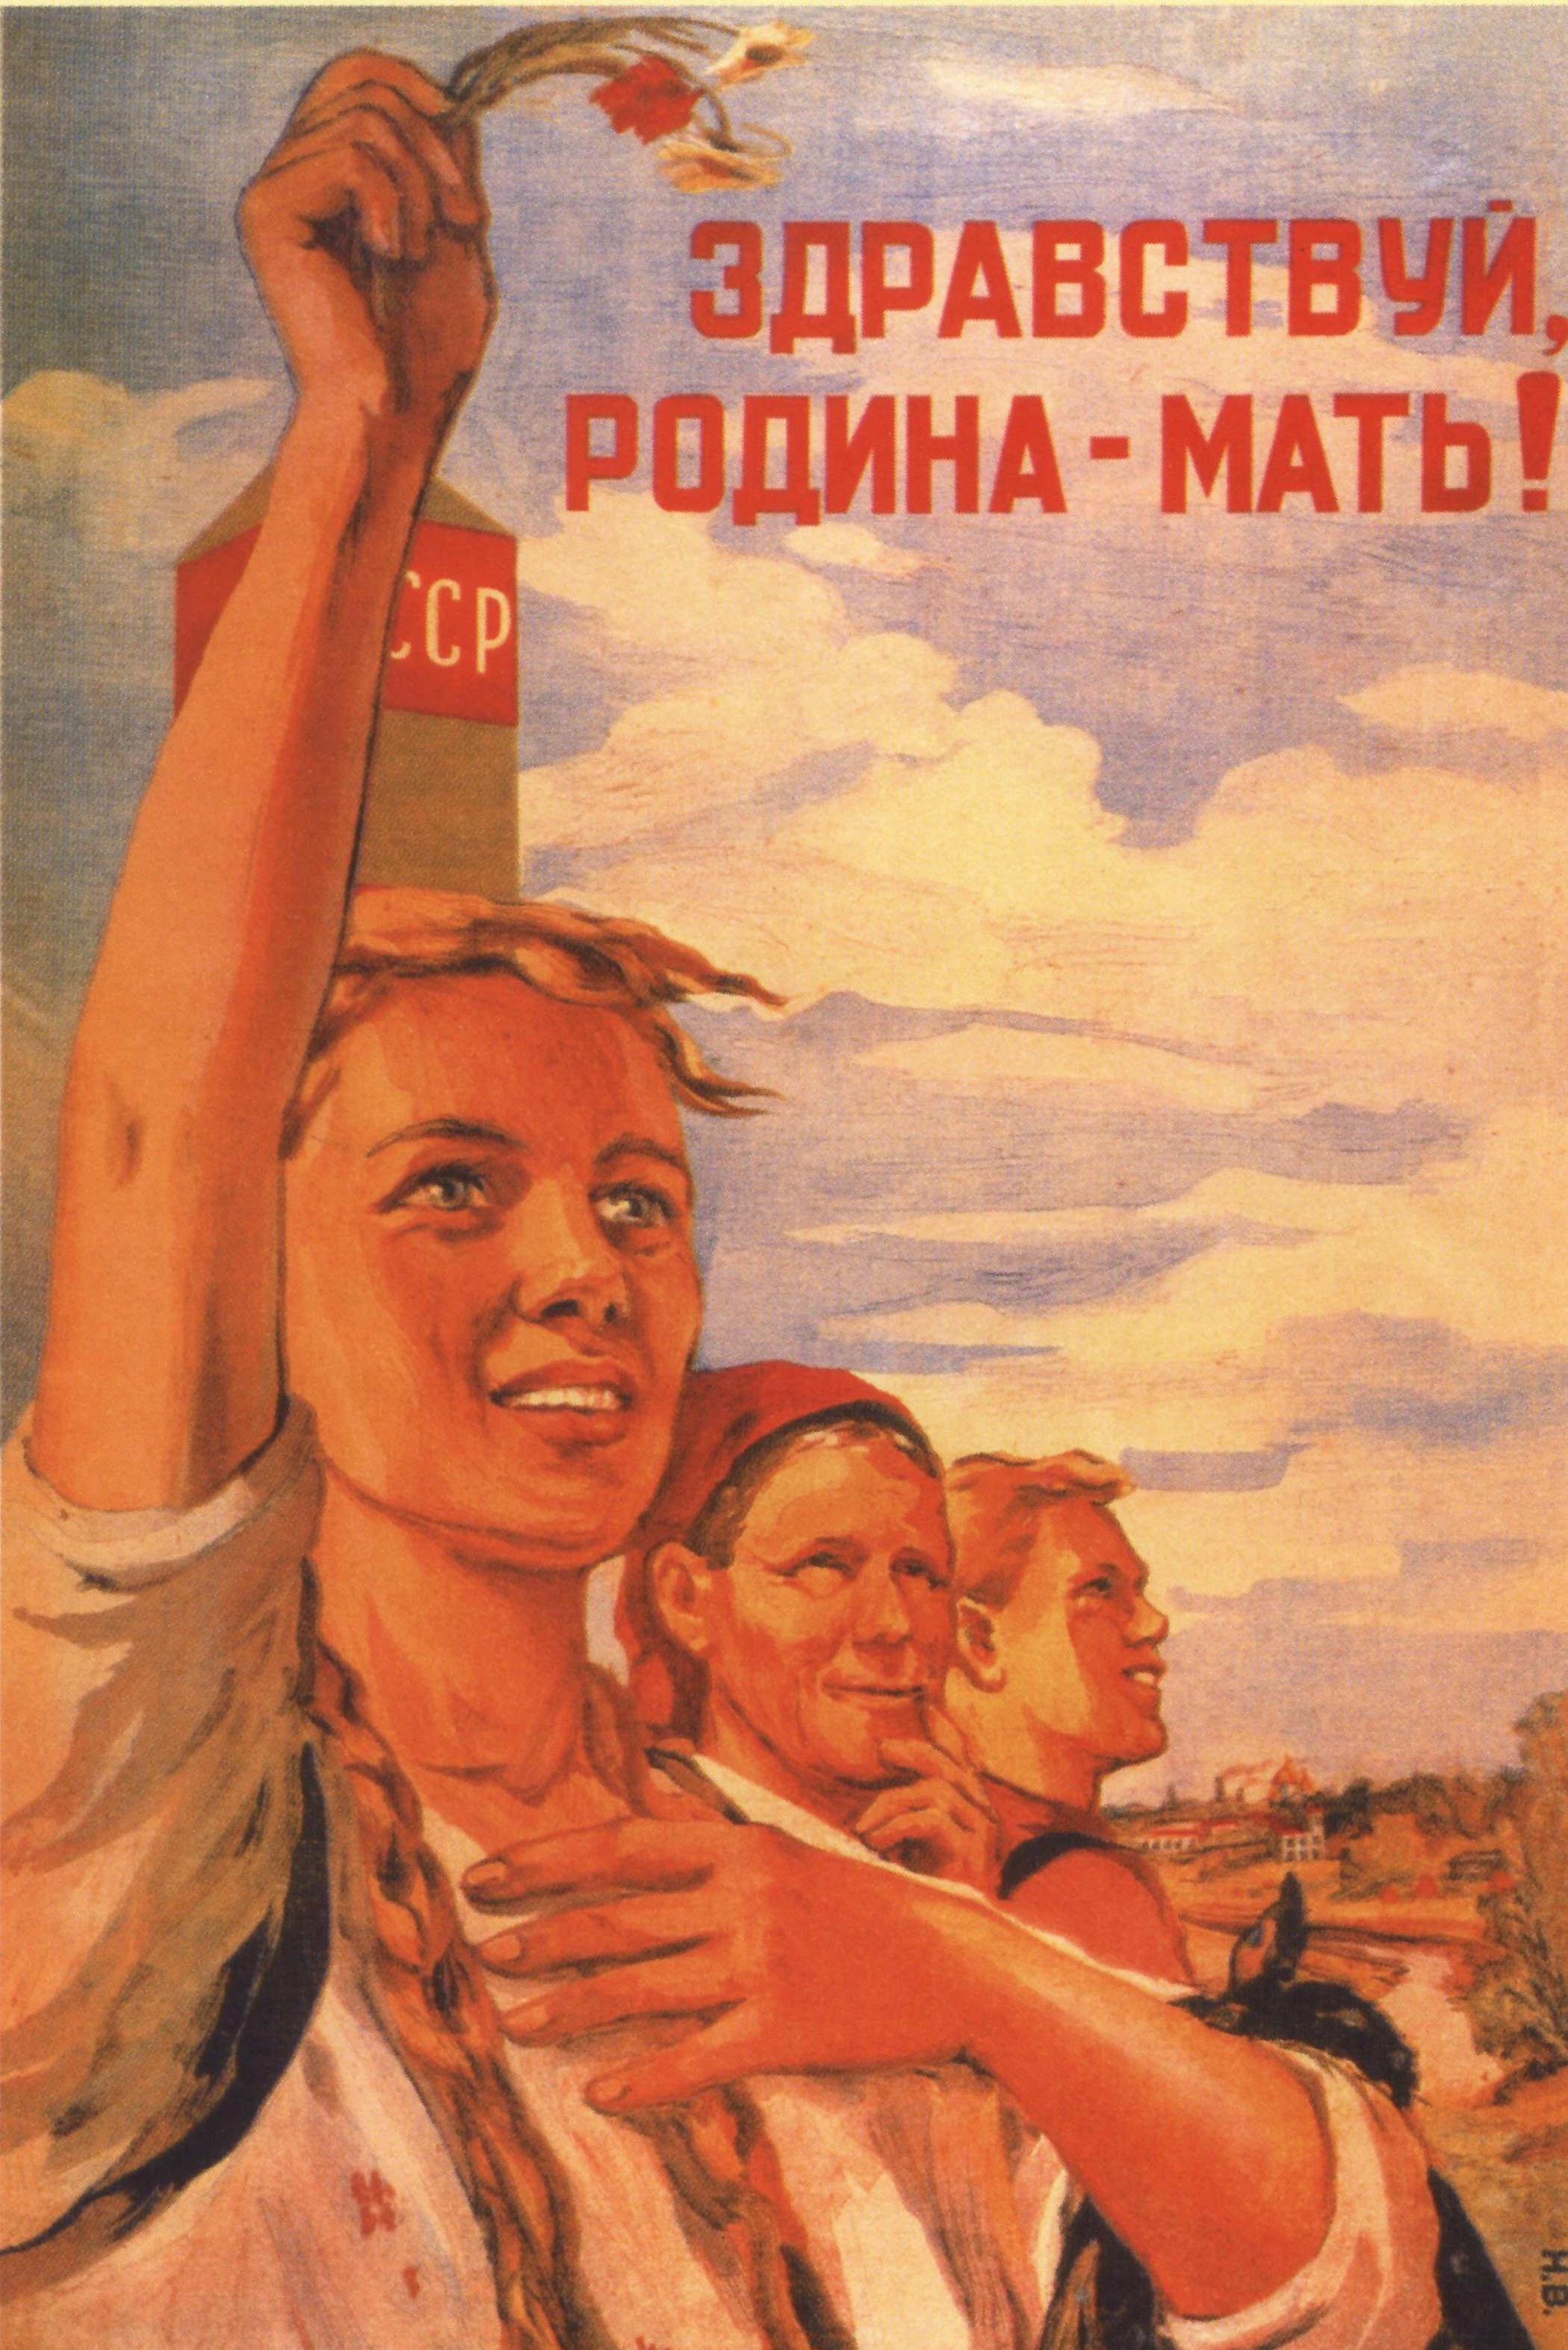 Плакат “Здравствуй, Родина-мать!” Н. Ватолина, 1945 г.